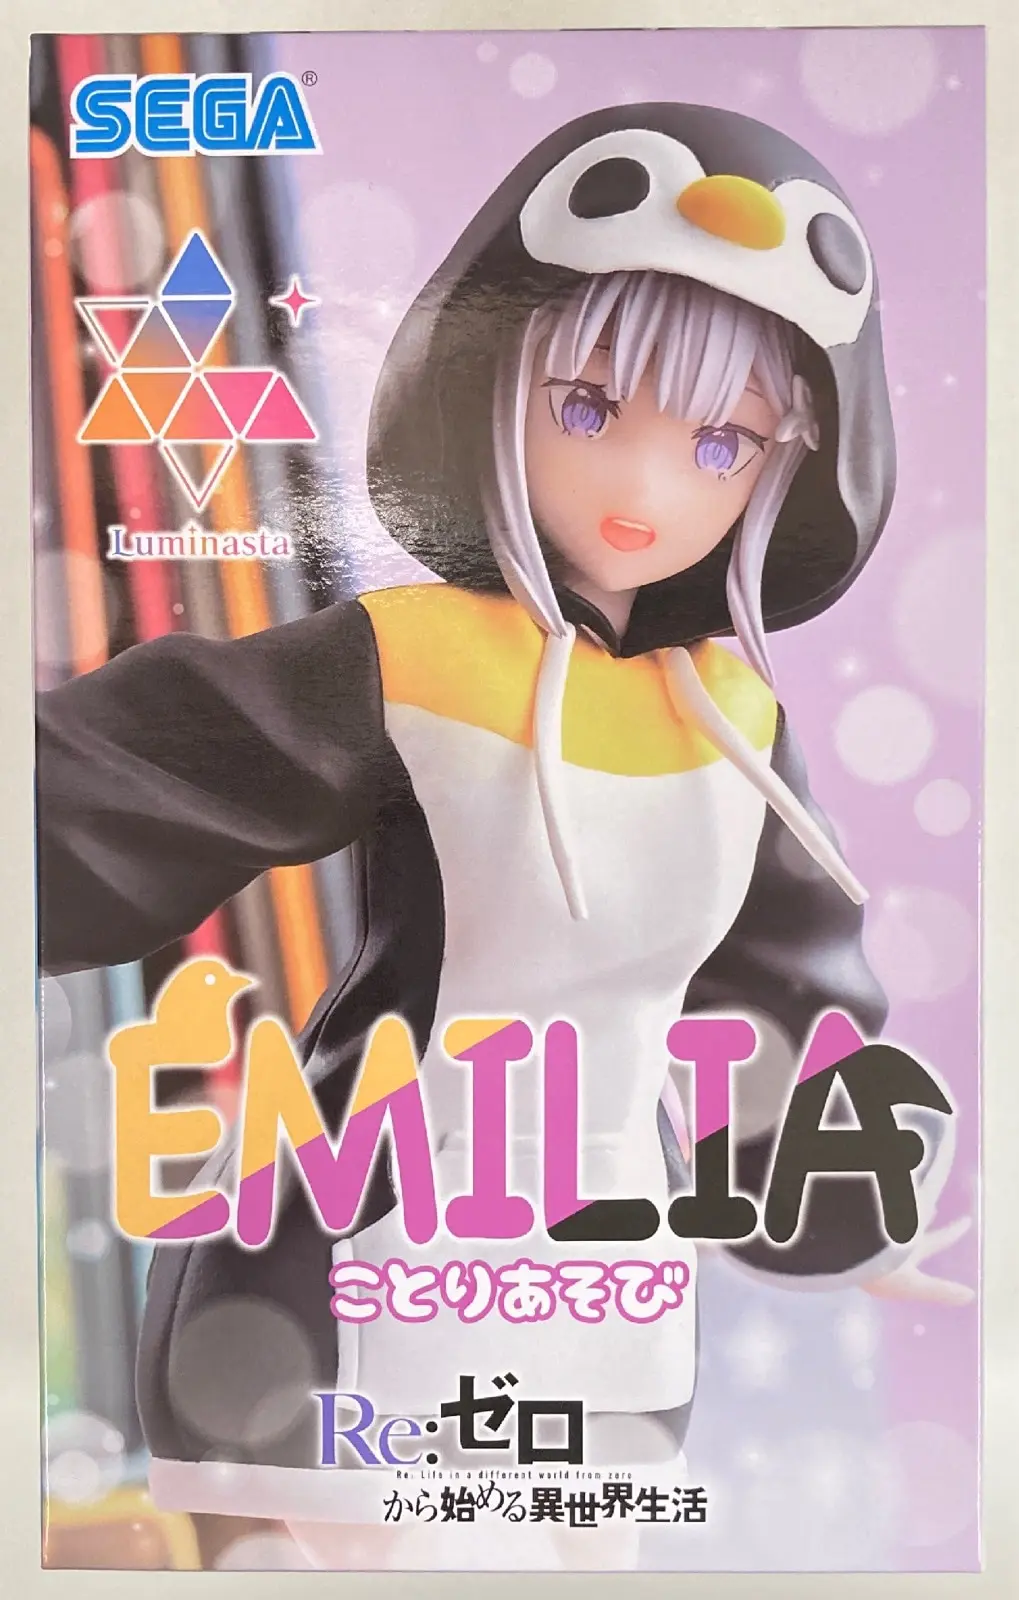 Luminasta - Re:Zero / Emilia